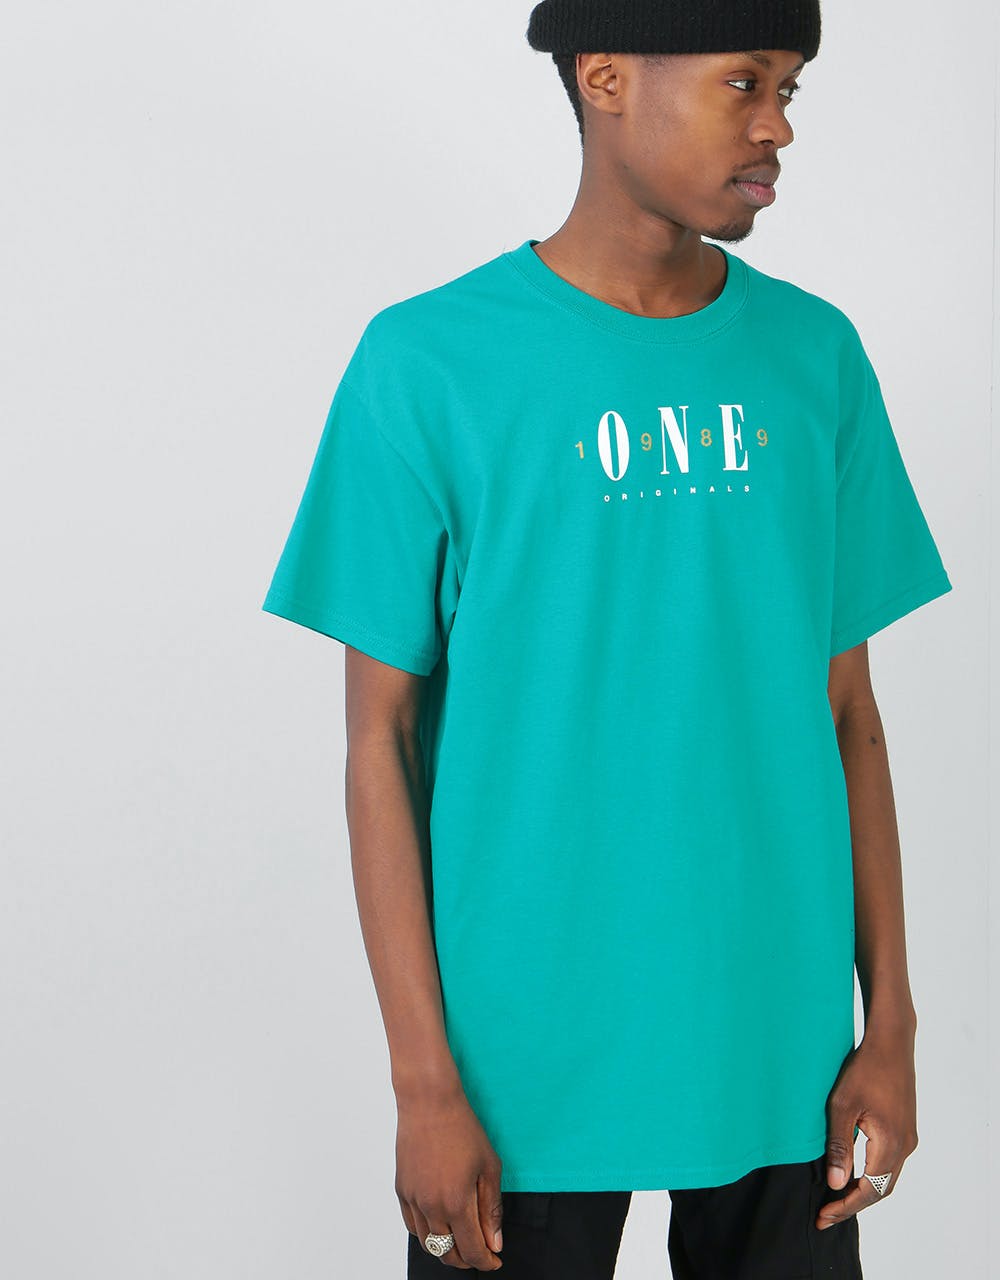 Route One Originals T-Shirt - Jade